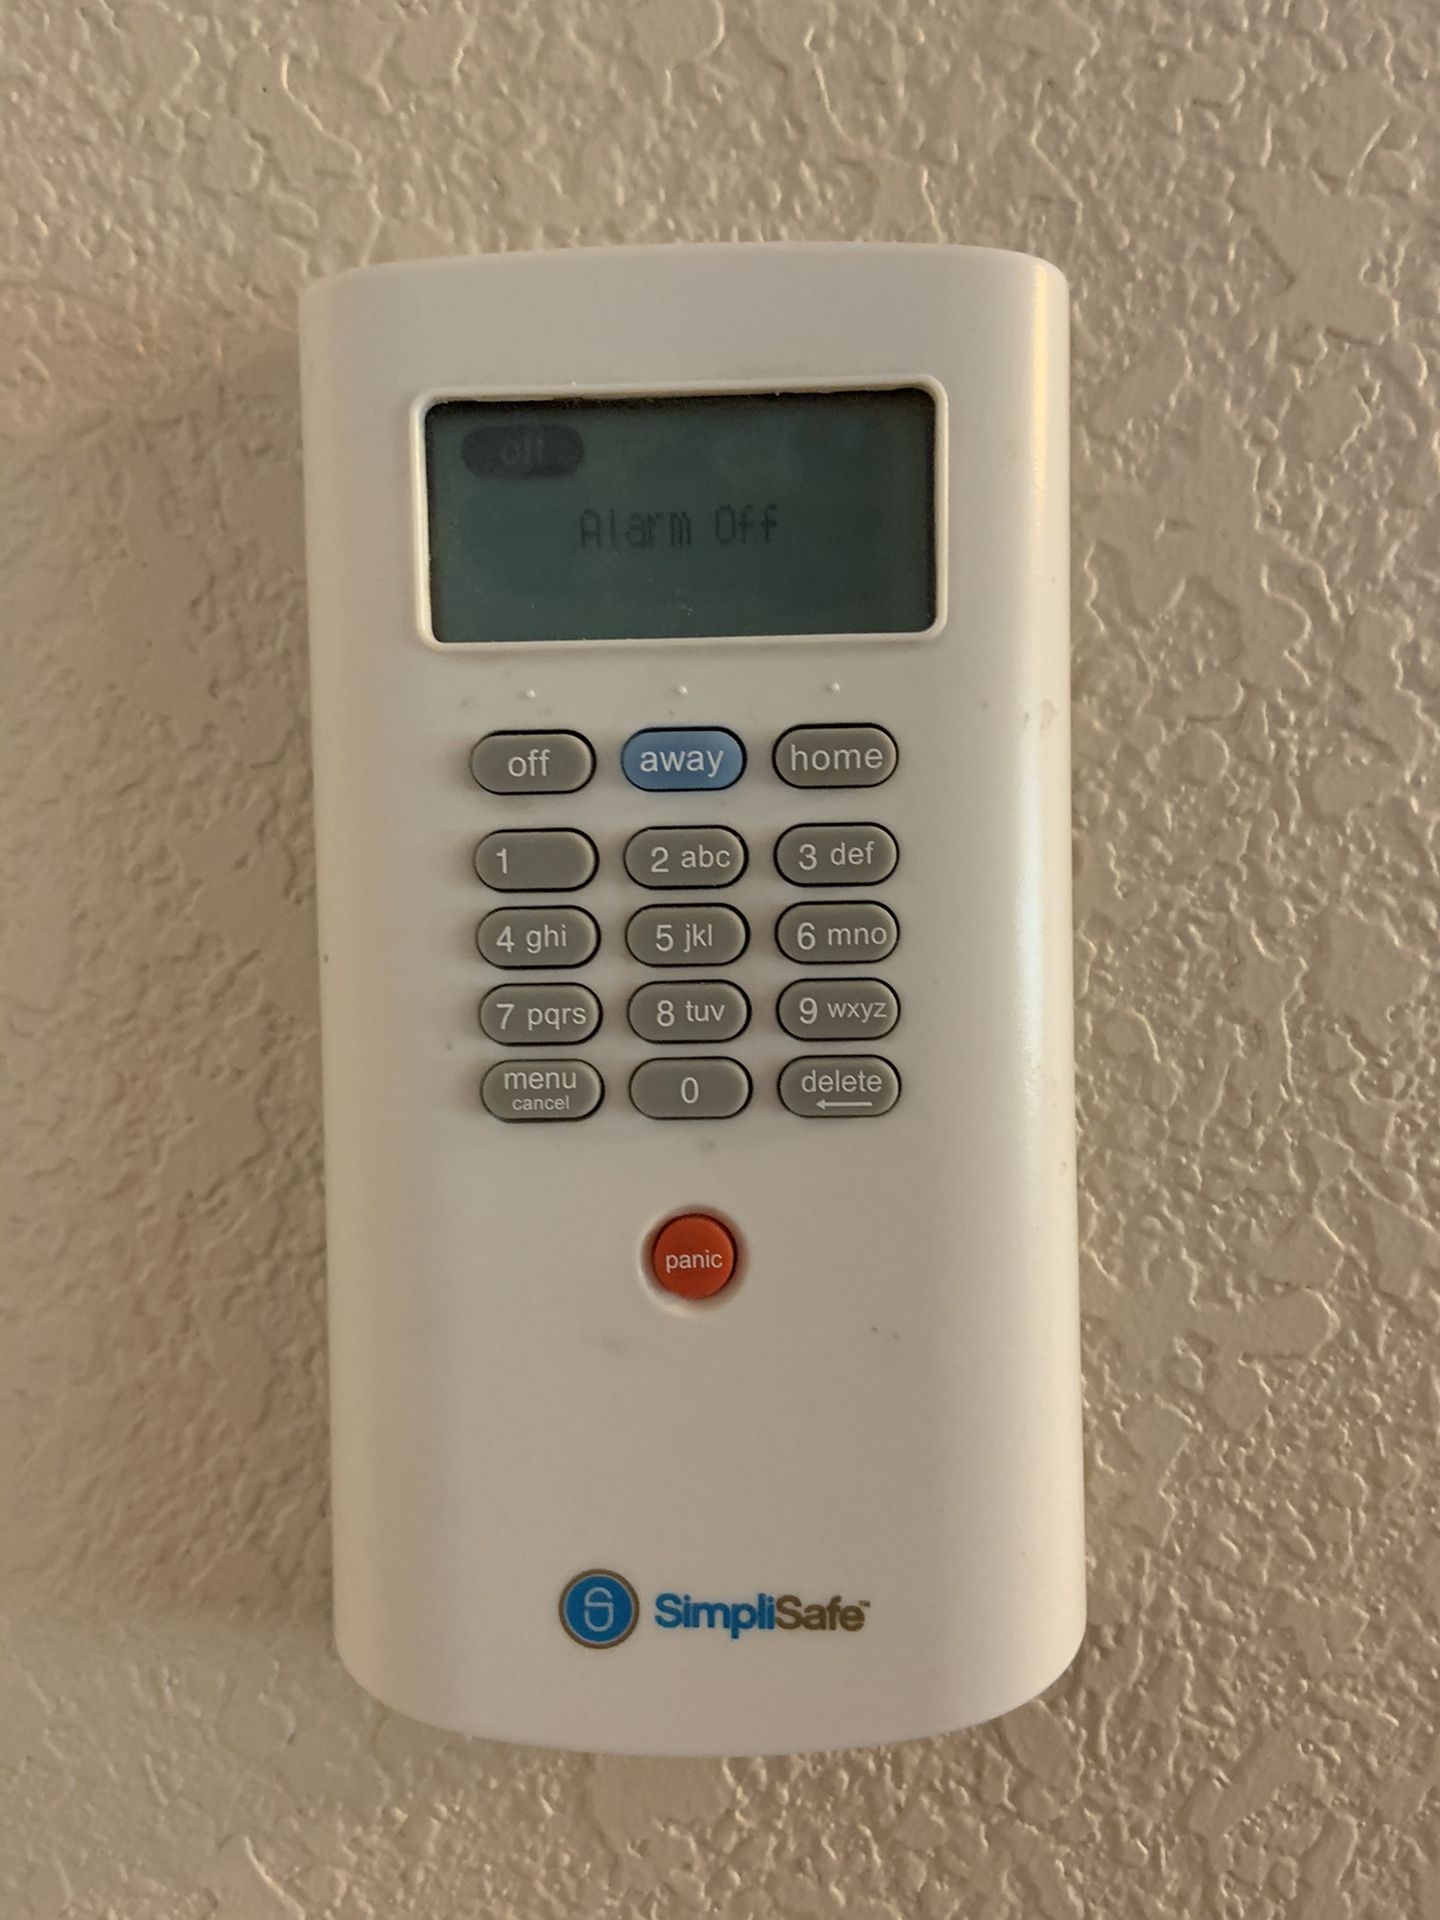 Simplisafe home security system